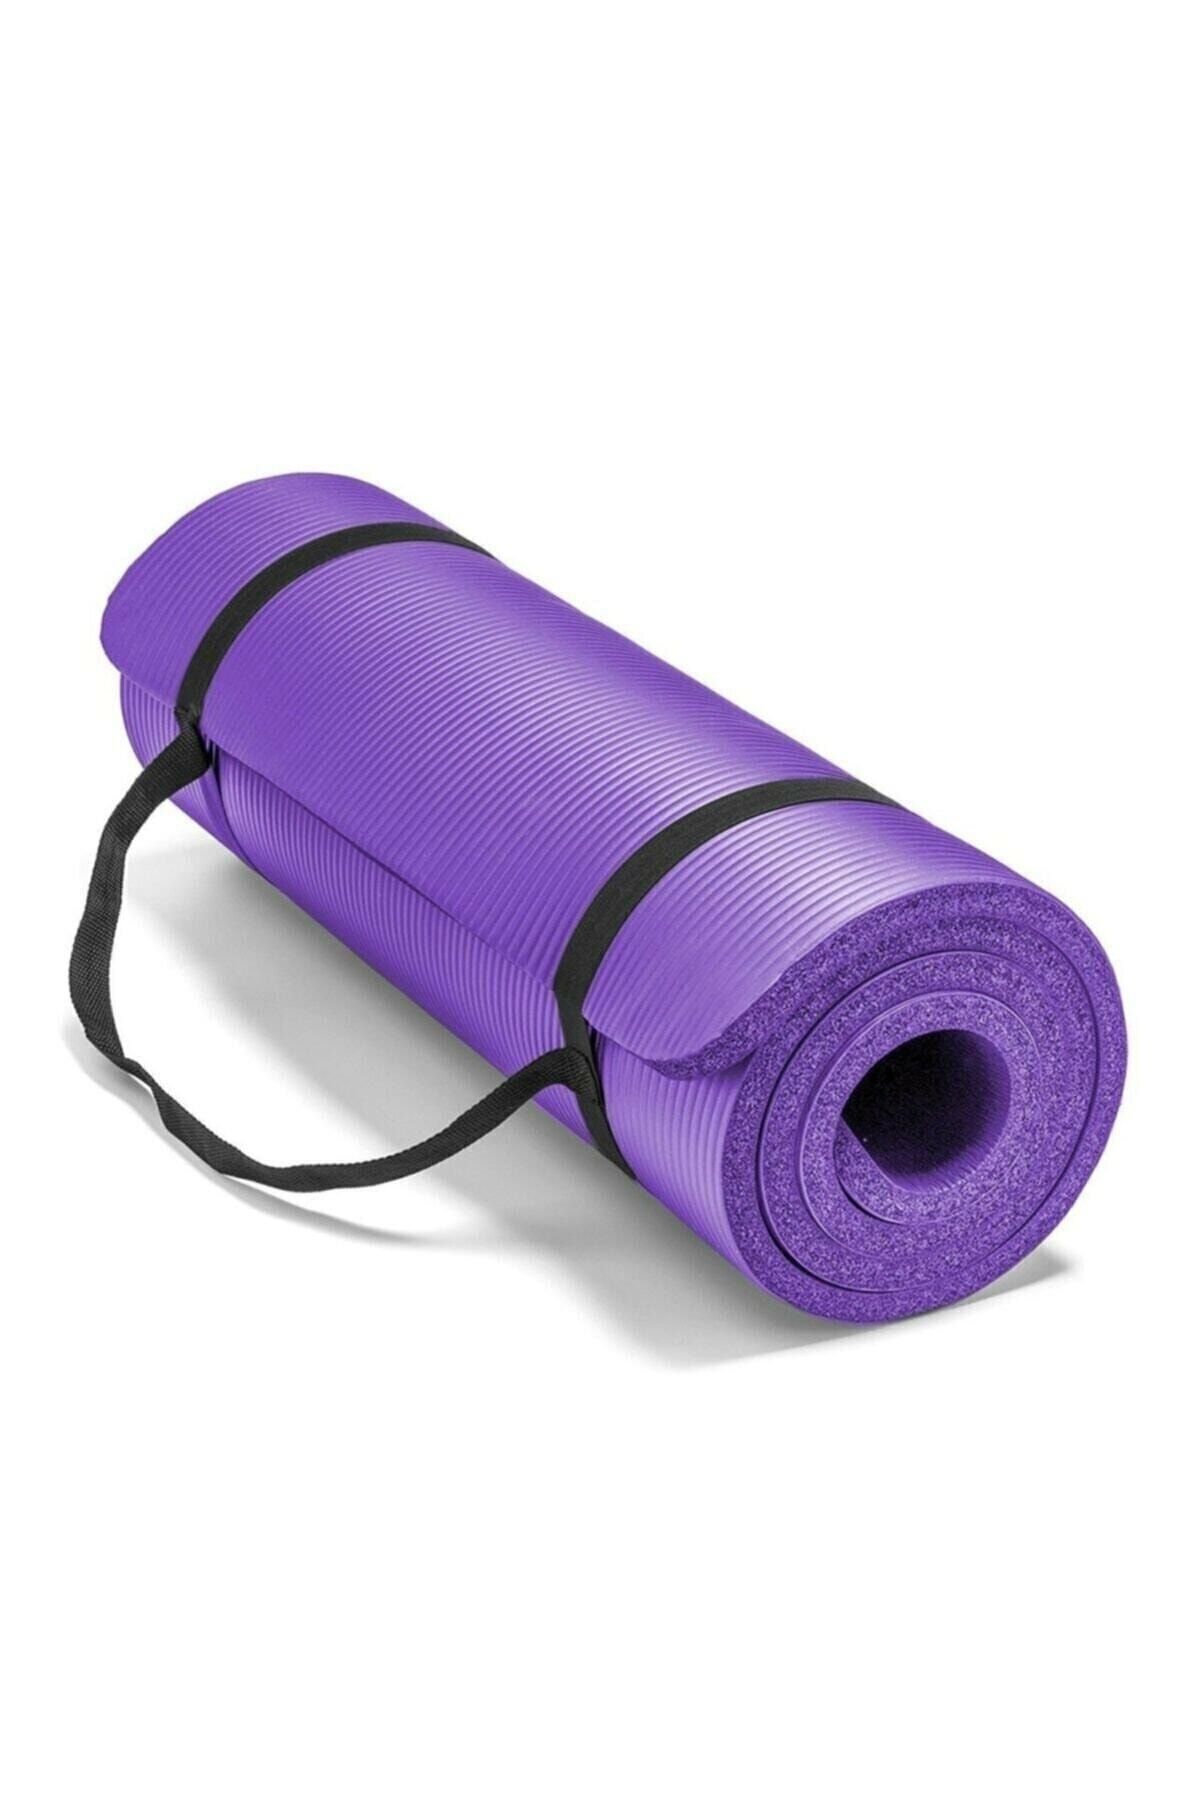 Povit Plates Yoga Egzersiz Minderi 10 Mm.renk Seçenekli